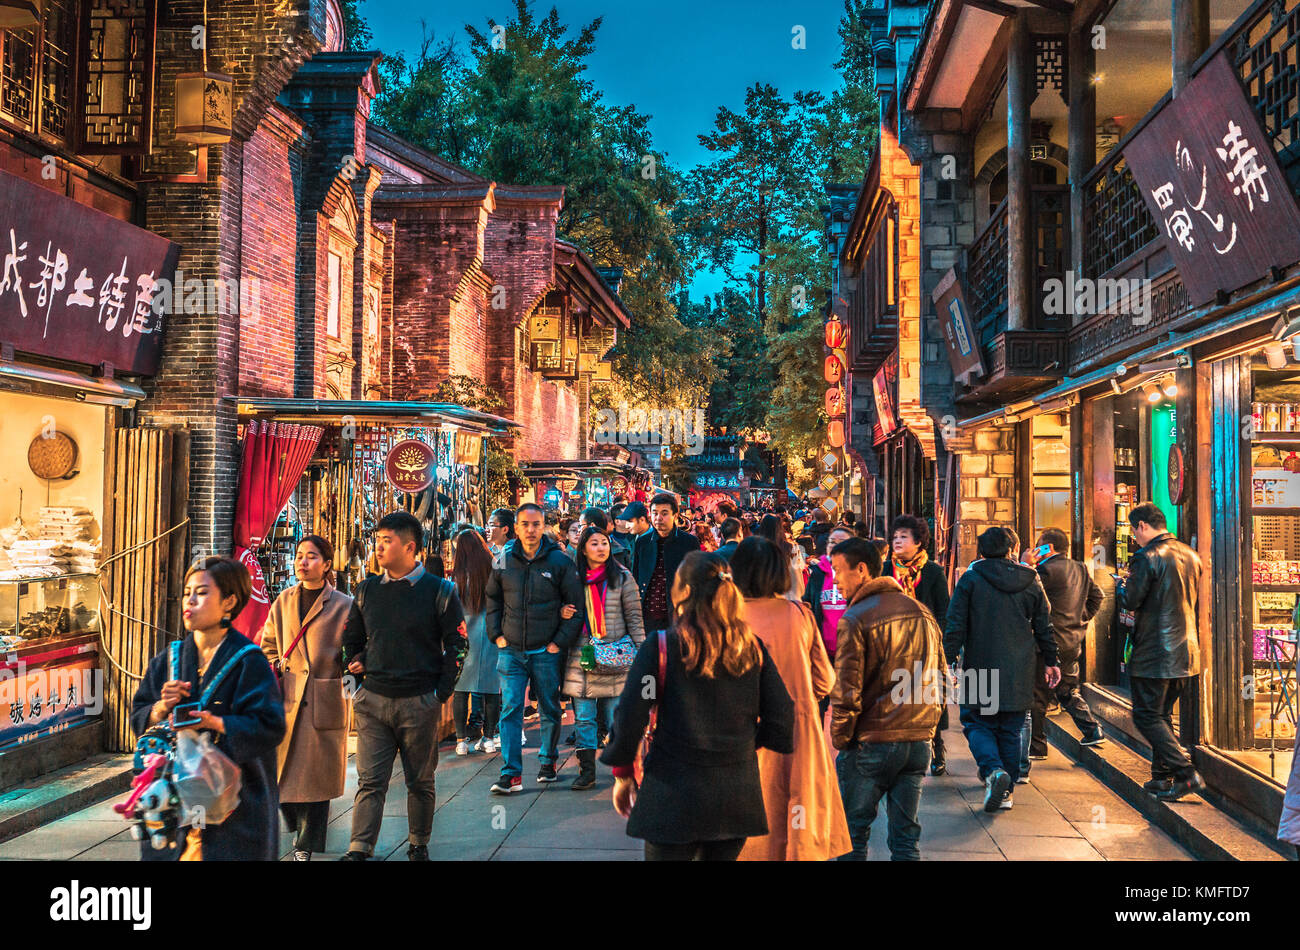 Chengdu Sichuan China, 22 November 2017: Jinli ancient town night scene street view Stock Photo